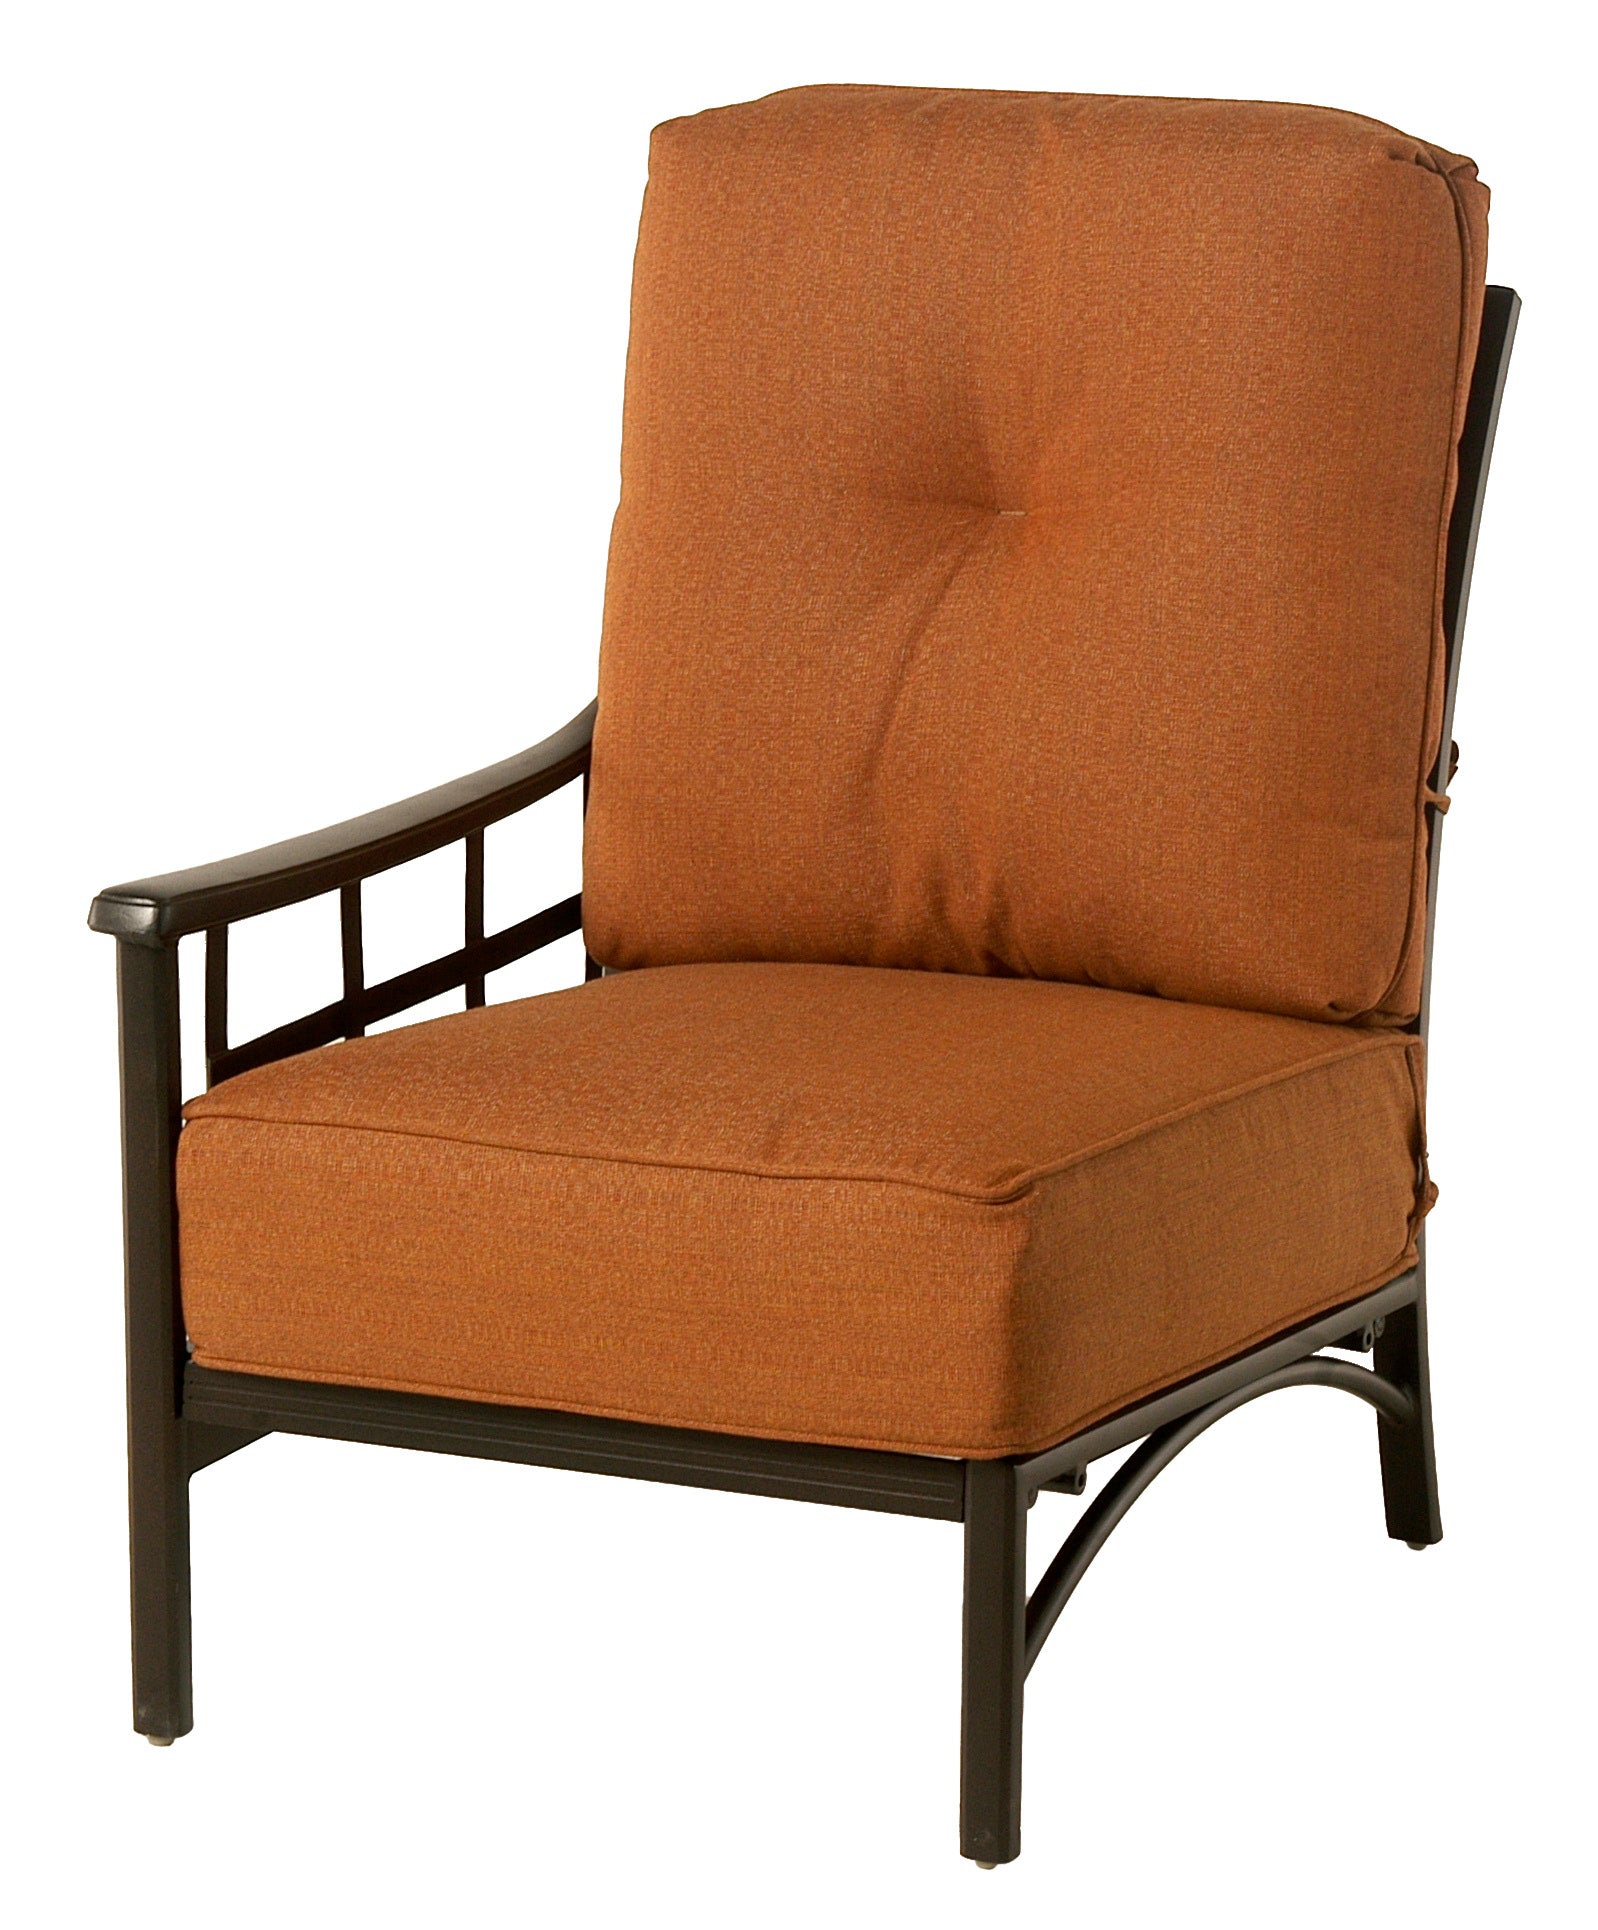 Stratford Estate Club Right Chair with cushion